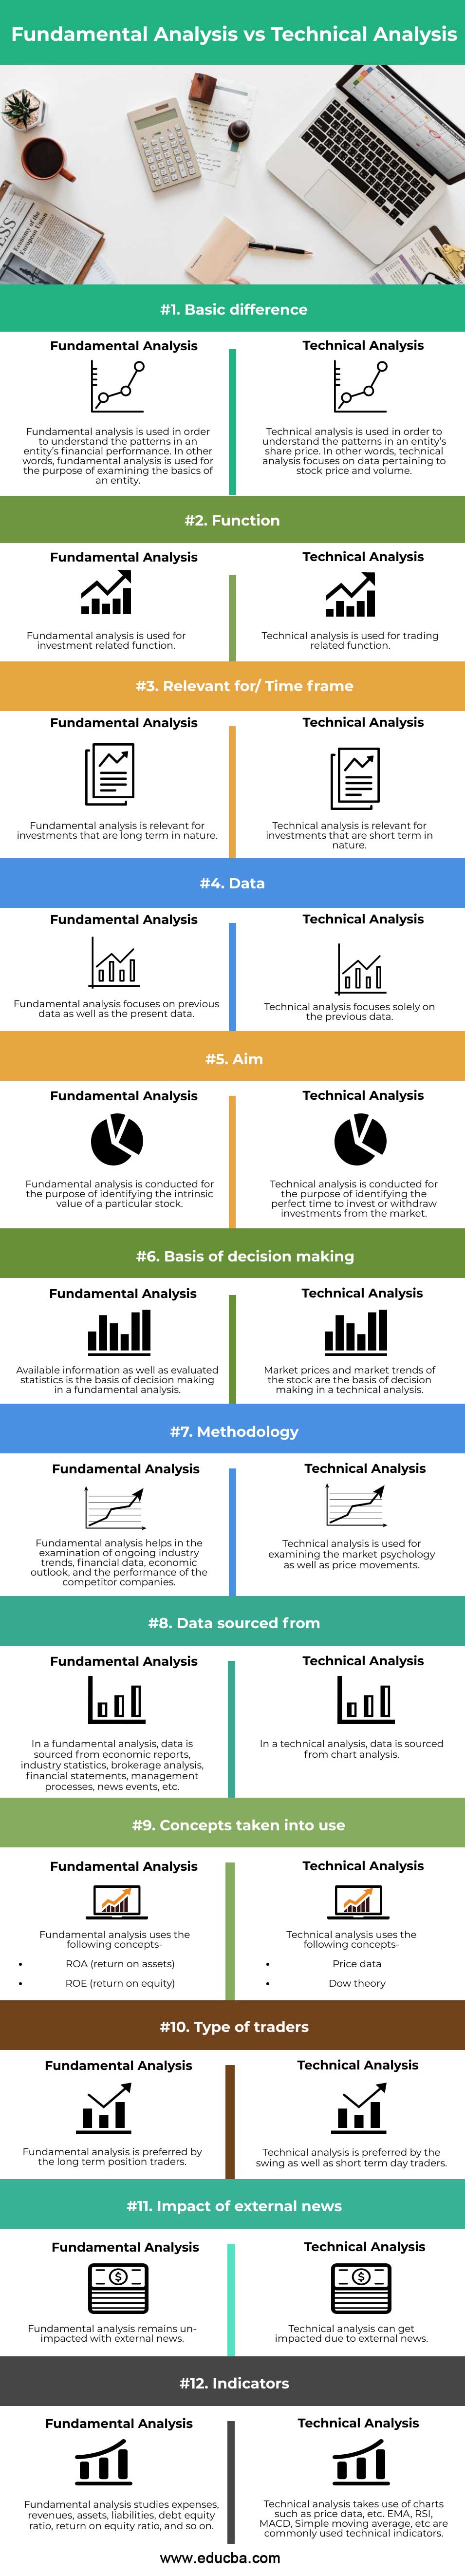 fundamental vs technical analysis thesis